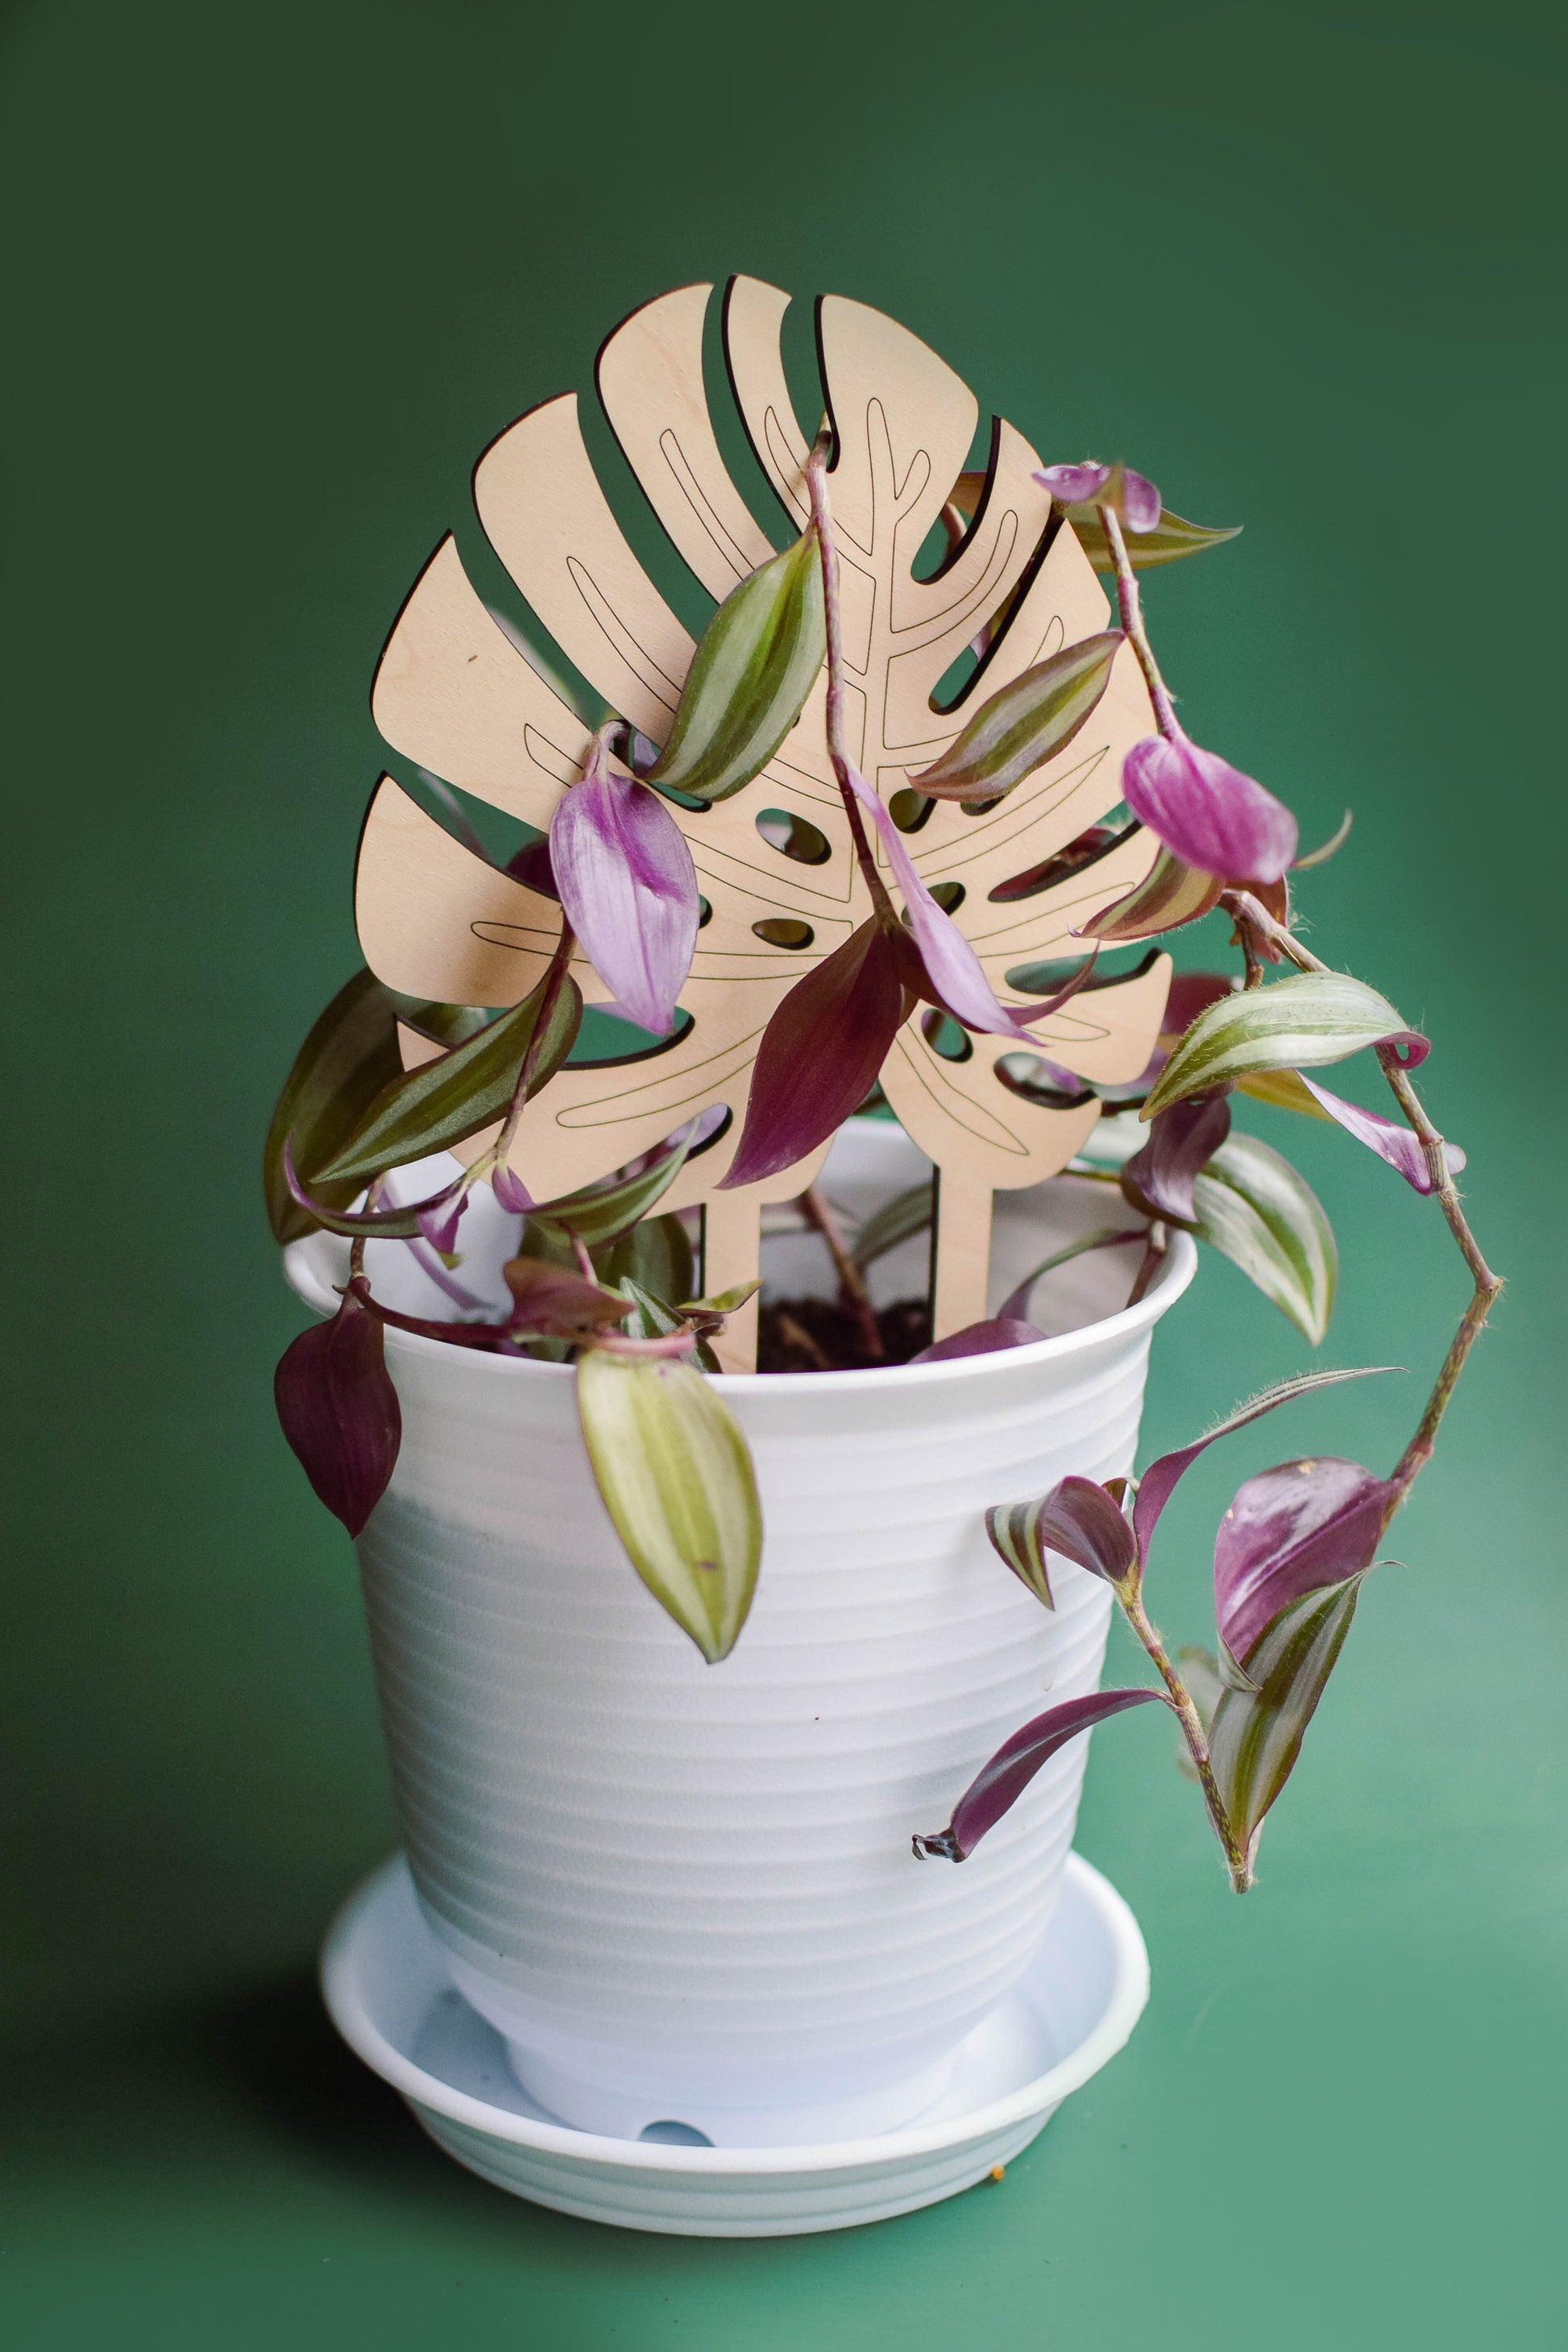 Monstera leaf indoor plant trellis for climbing plants